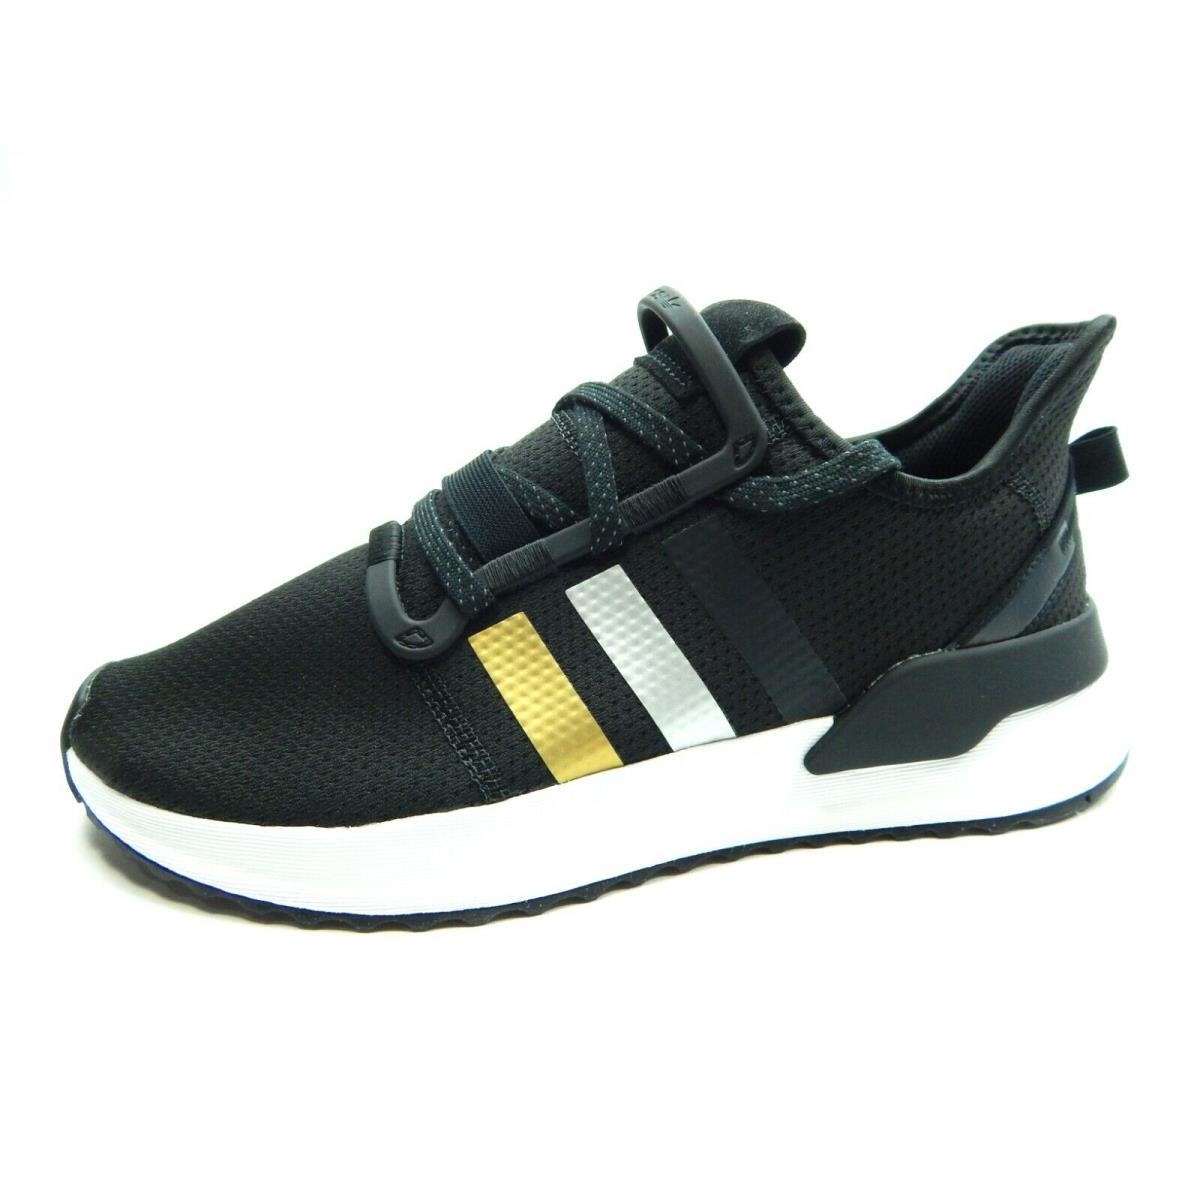 Adidas U-path Run Black Gold White Men Shoes Size 9.5 FW2323 - BLACK GOLD